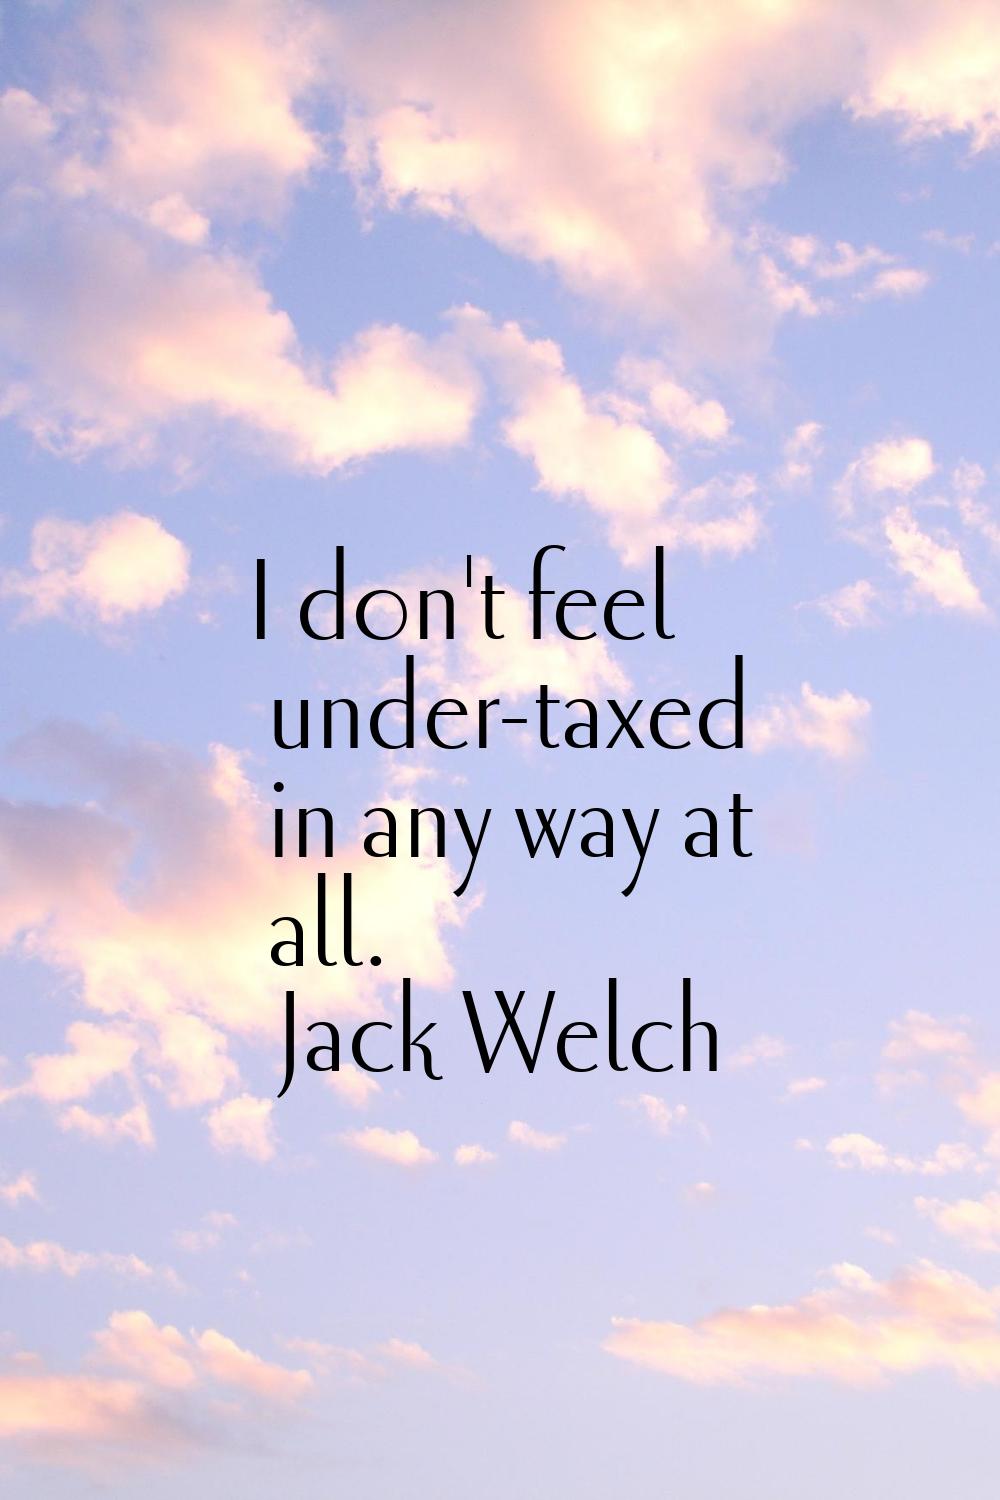 I don't feel under-taxed in any way at all.